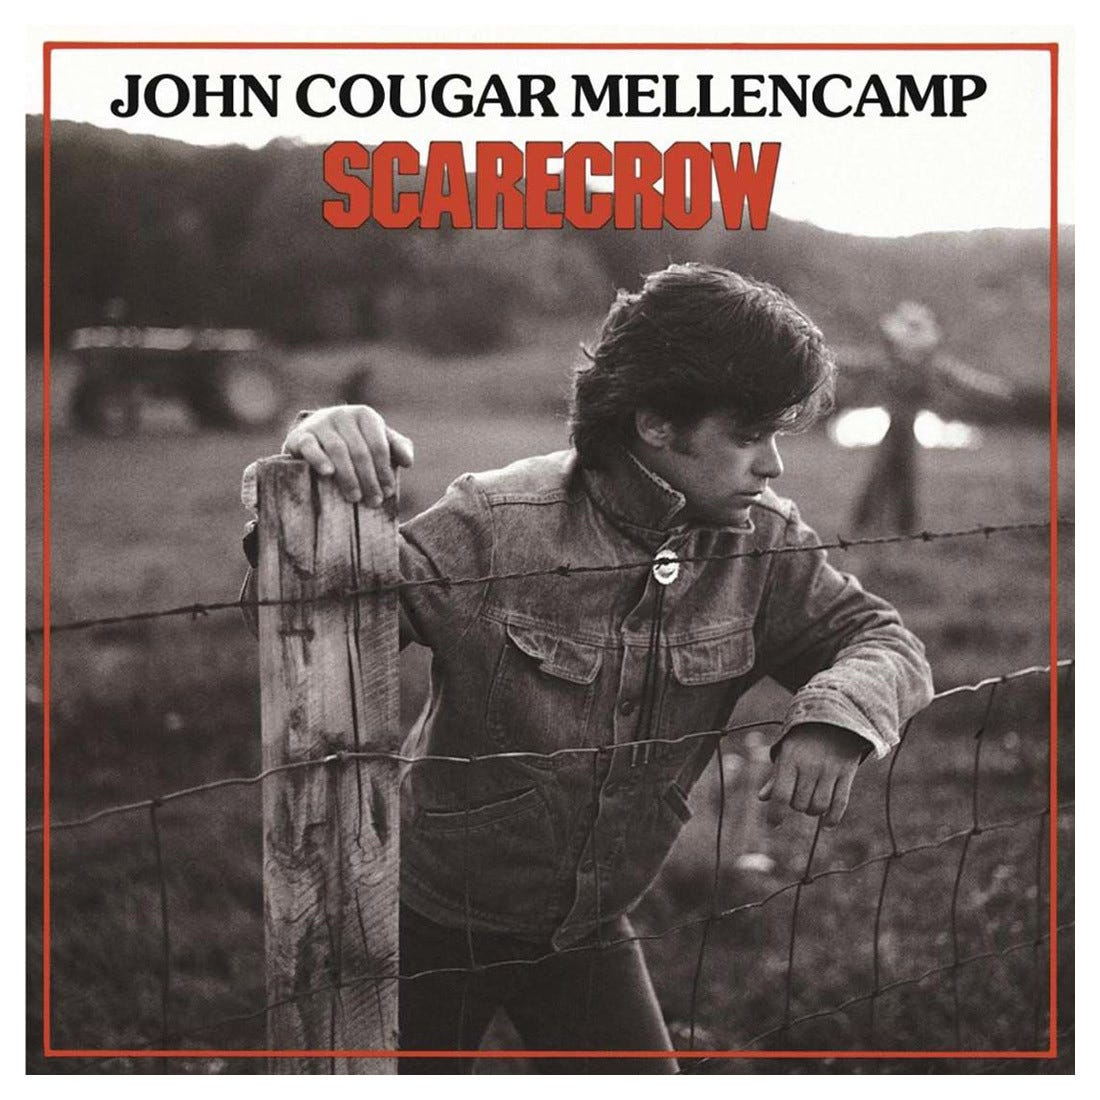 John Mellencamp on the cover of his album 'Scarecrow'